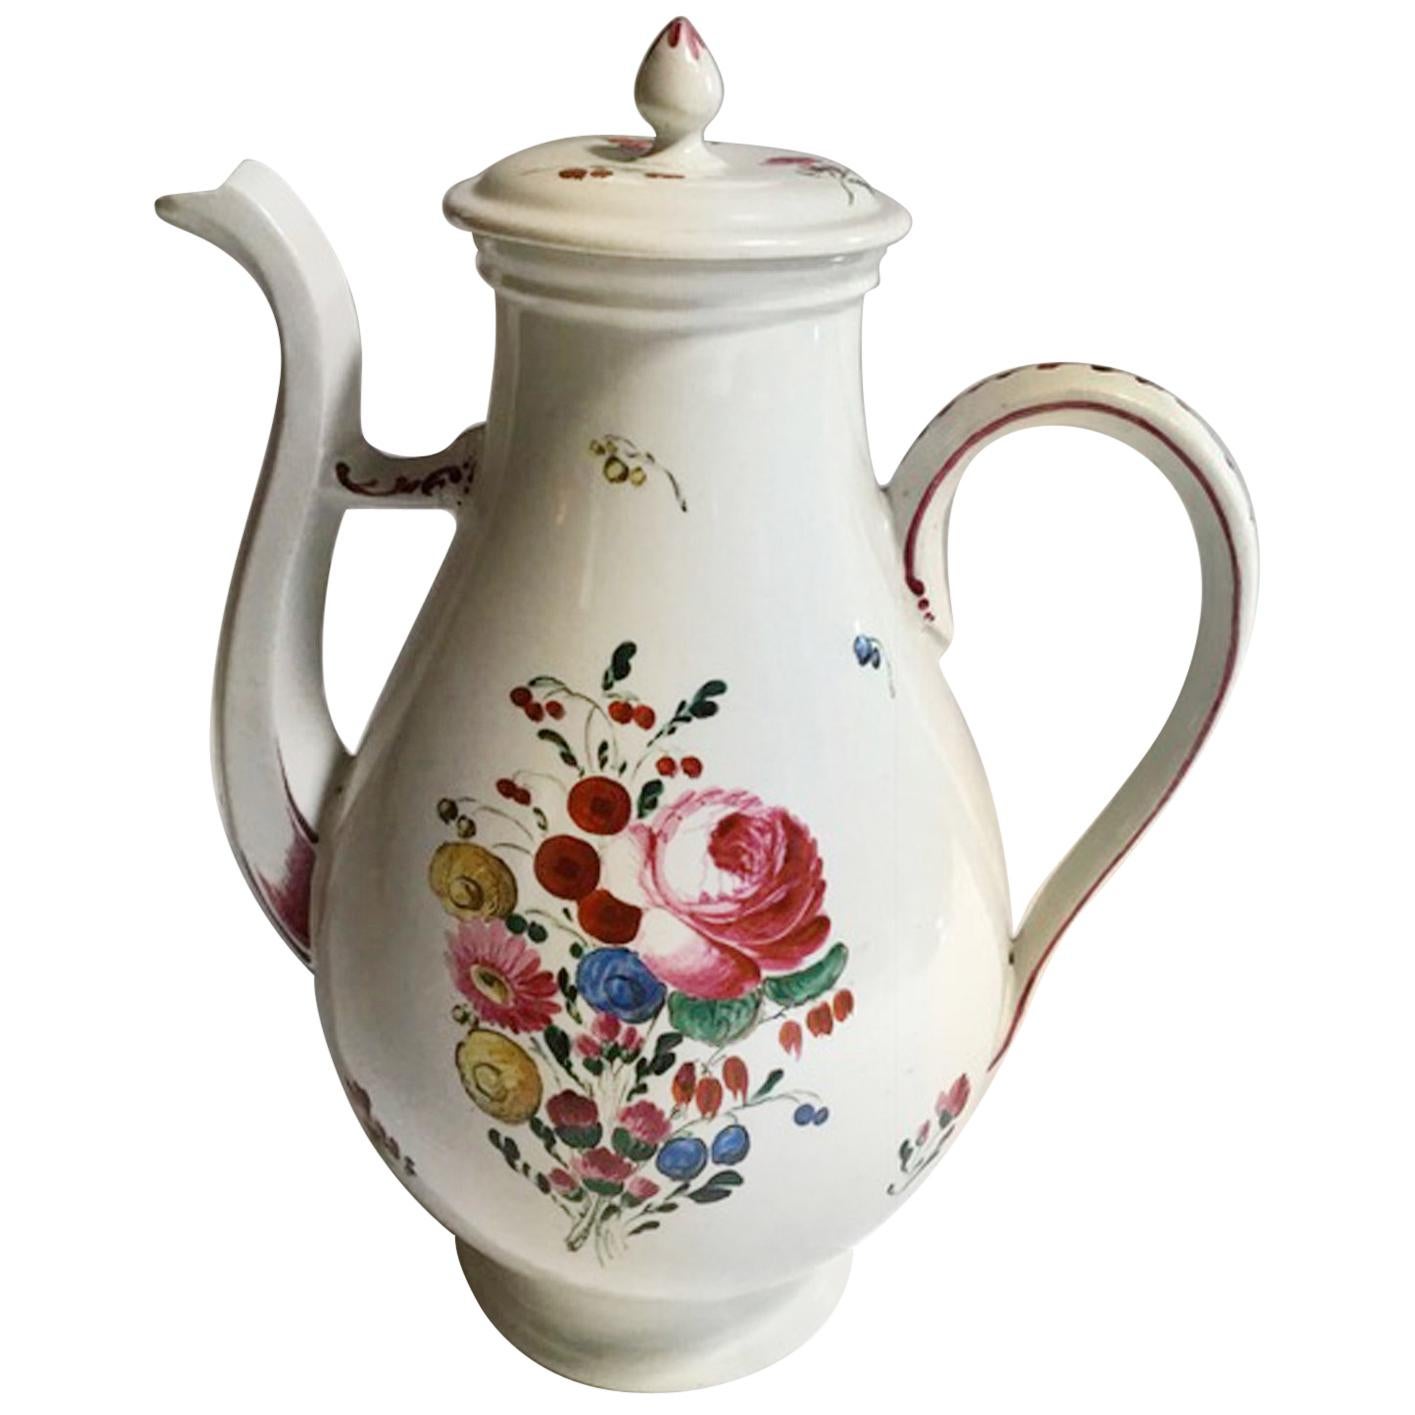 Italy Richard Ginori Mid-18th Century Porcelain Coffee Pot with Flowers Decor